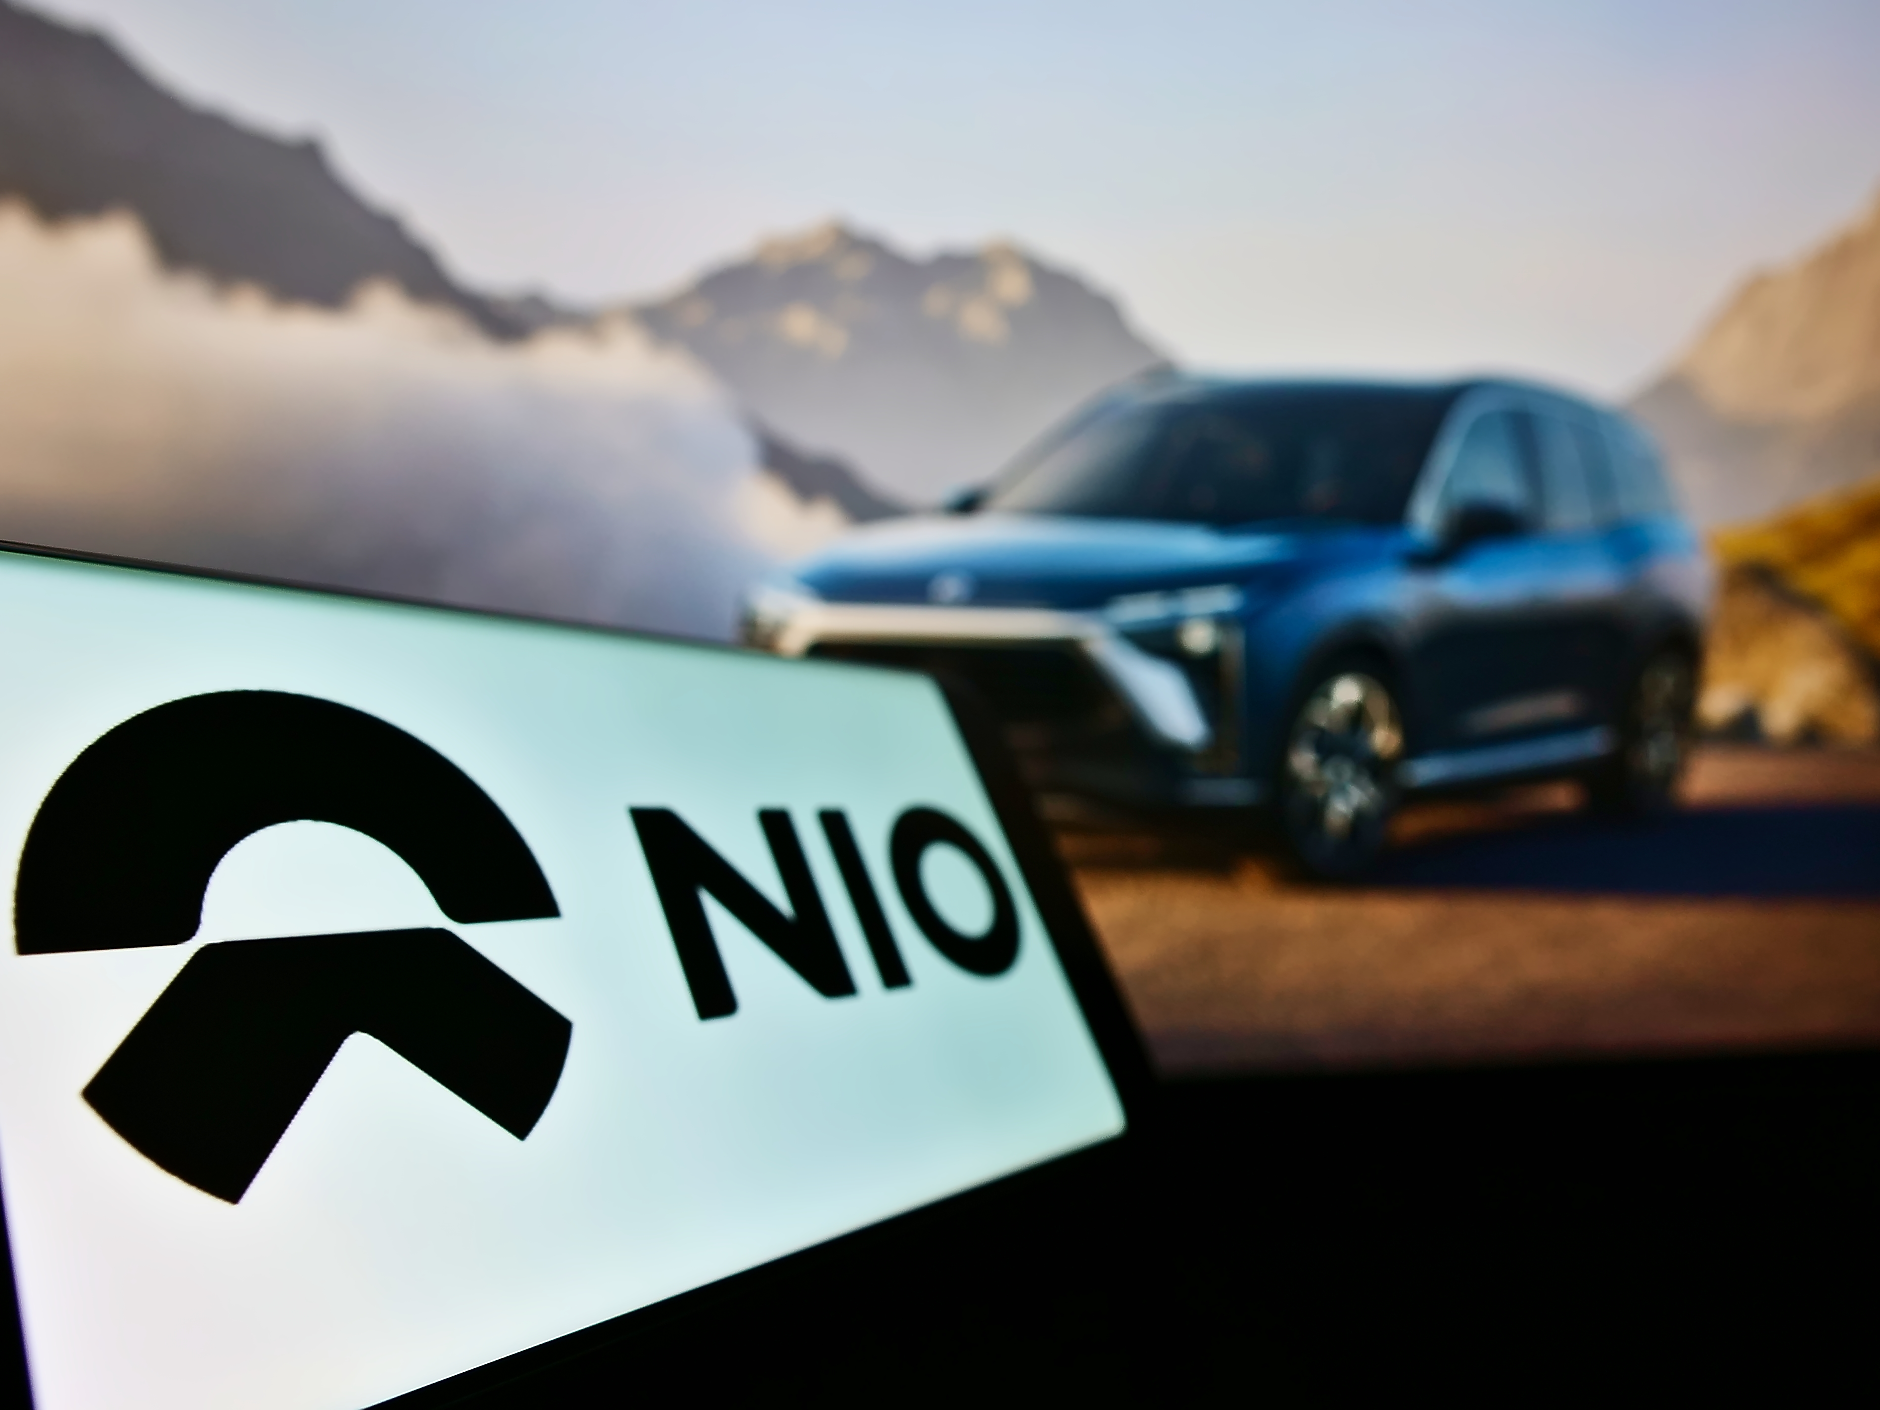 Производителят на електромобили NIO пуска облигации за 1 млрд. долара